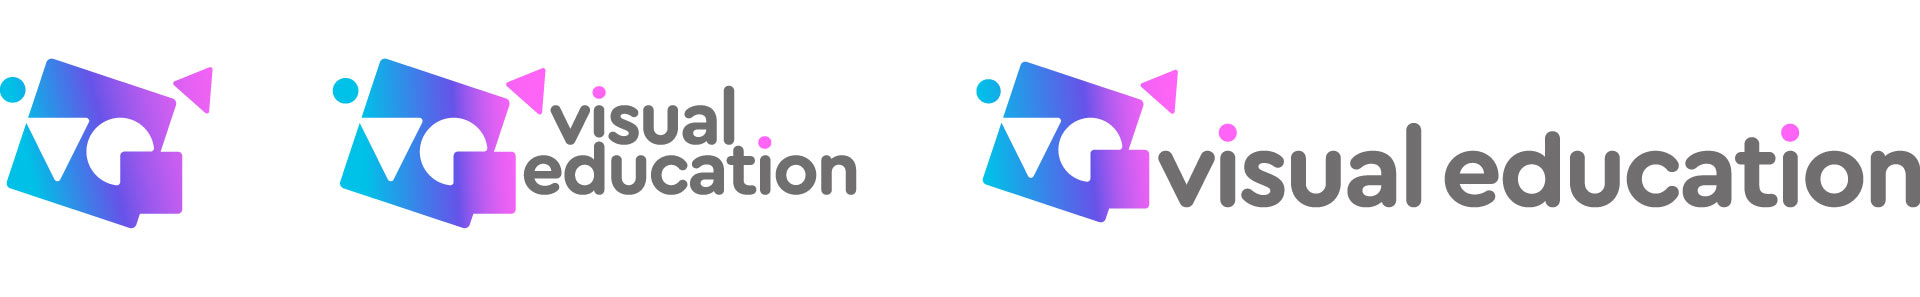 Visual Education Logo Variations